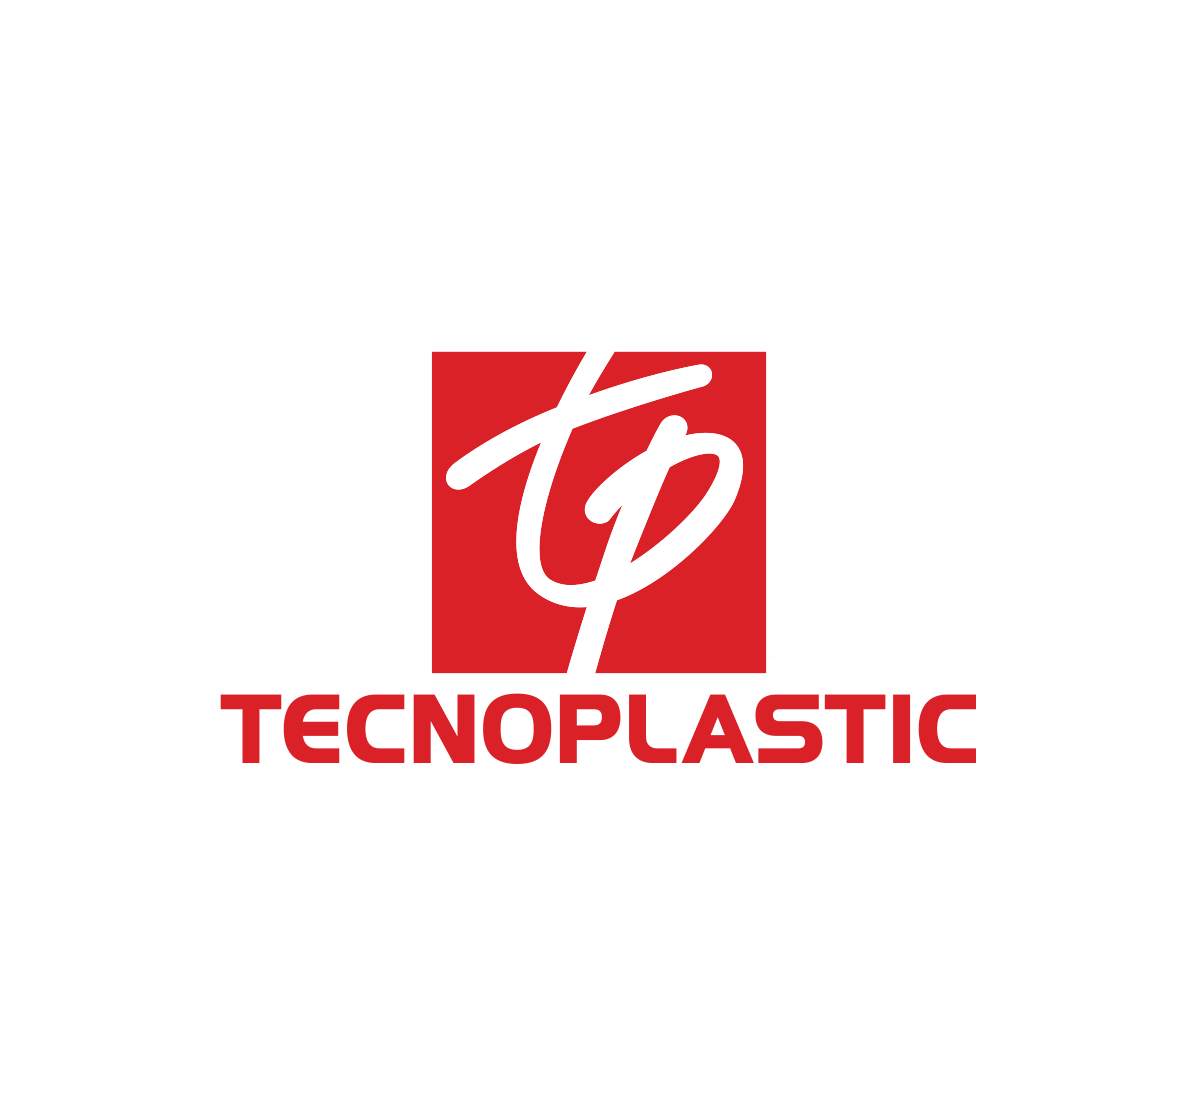 Tecnoplastic - Rolo & Pereira